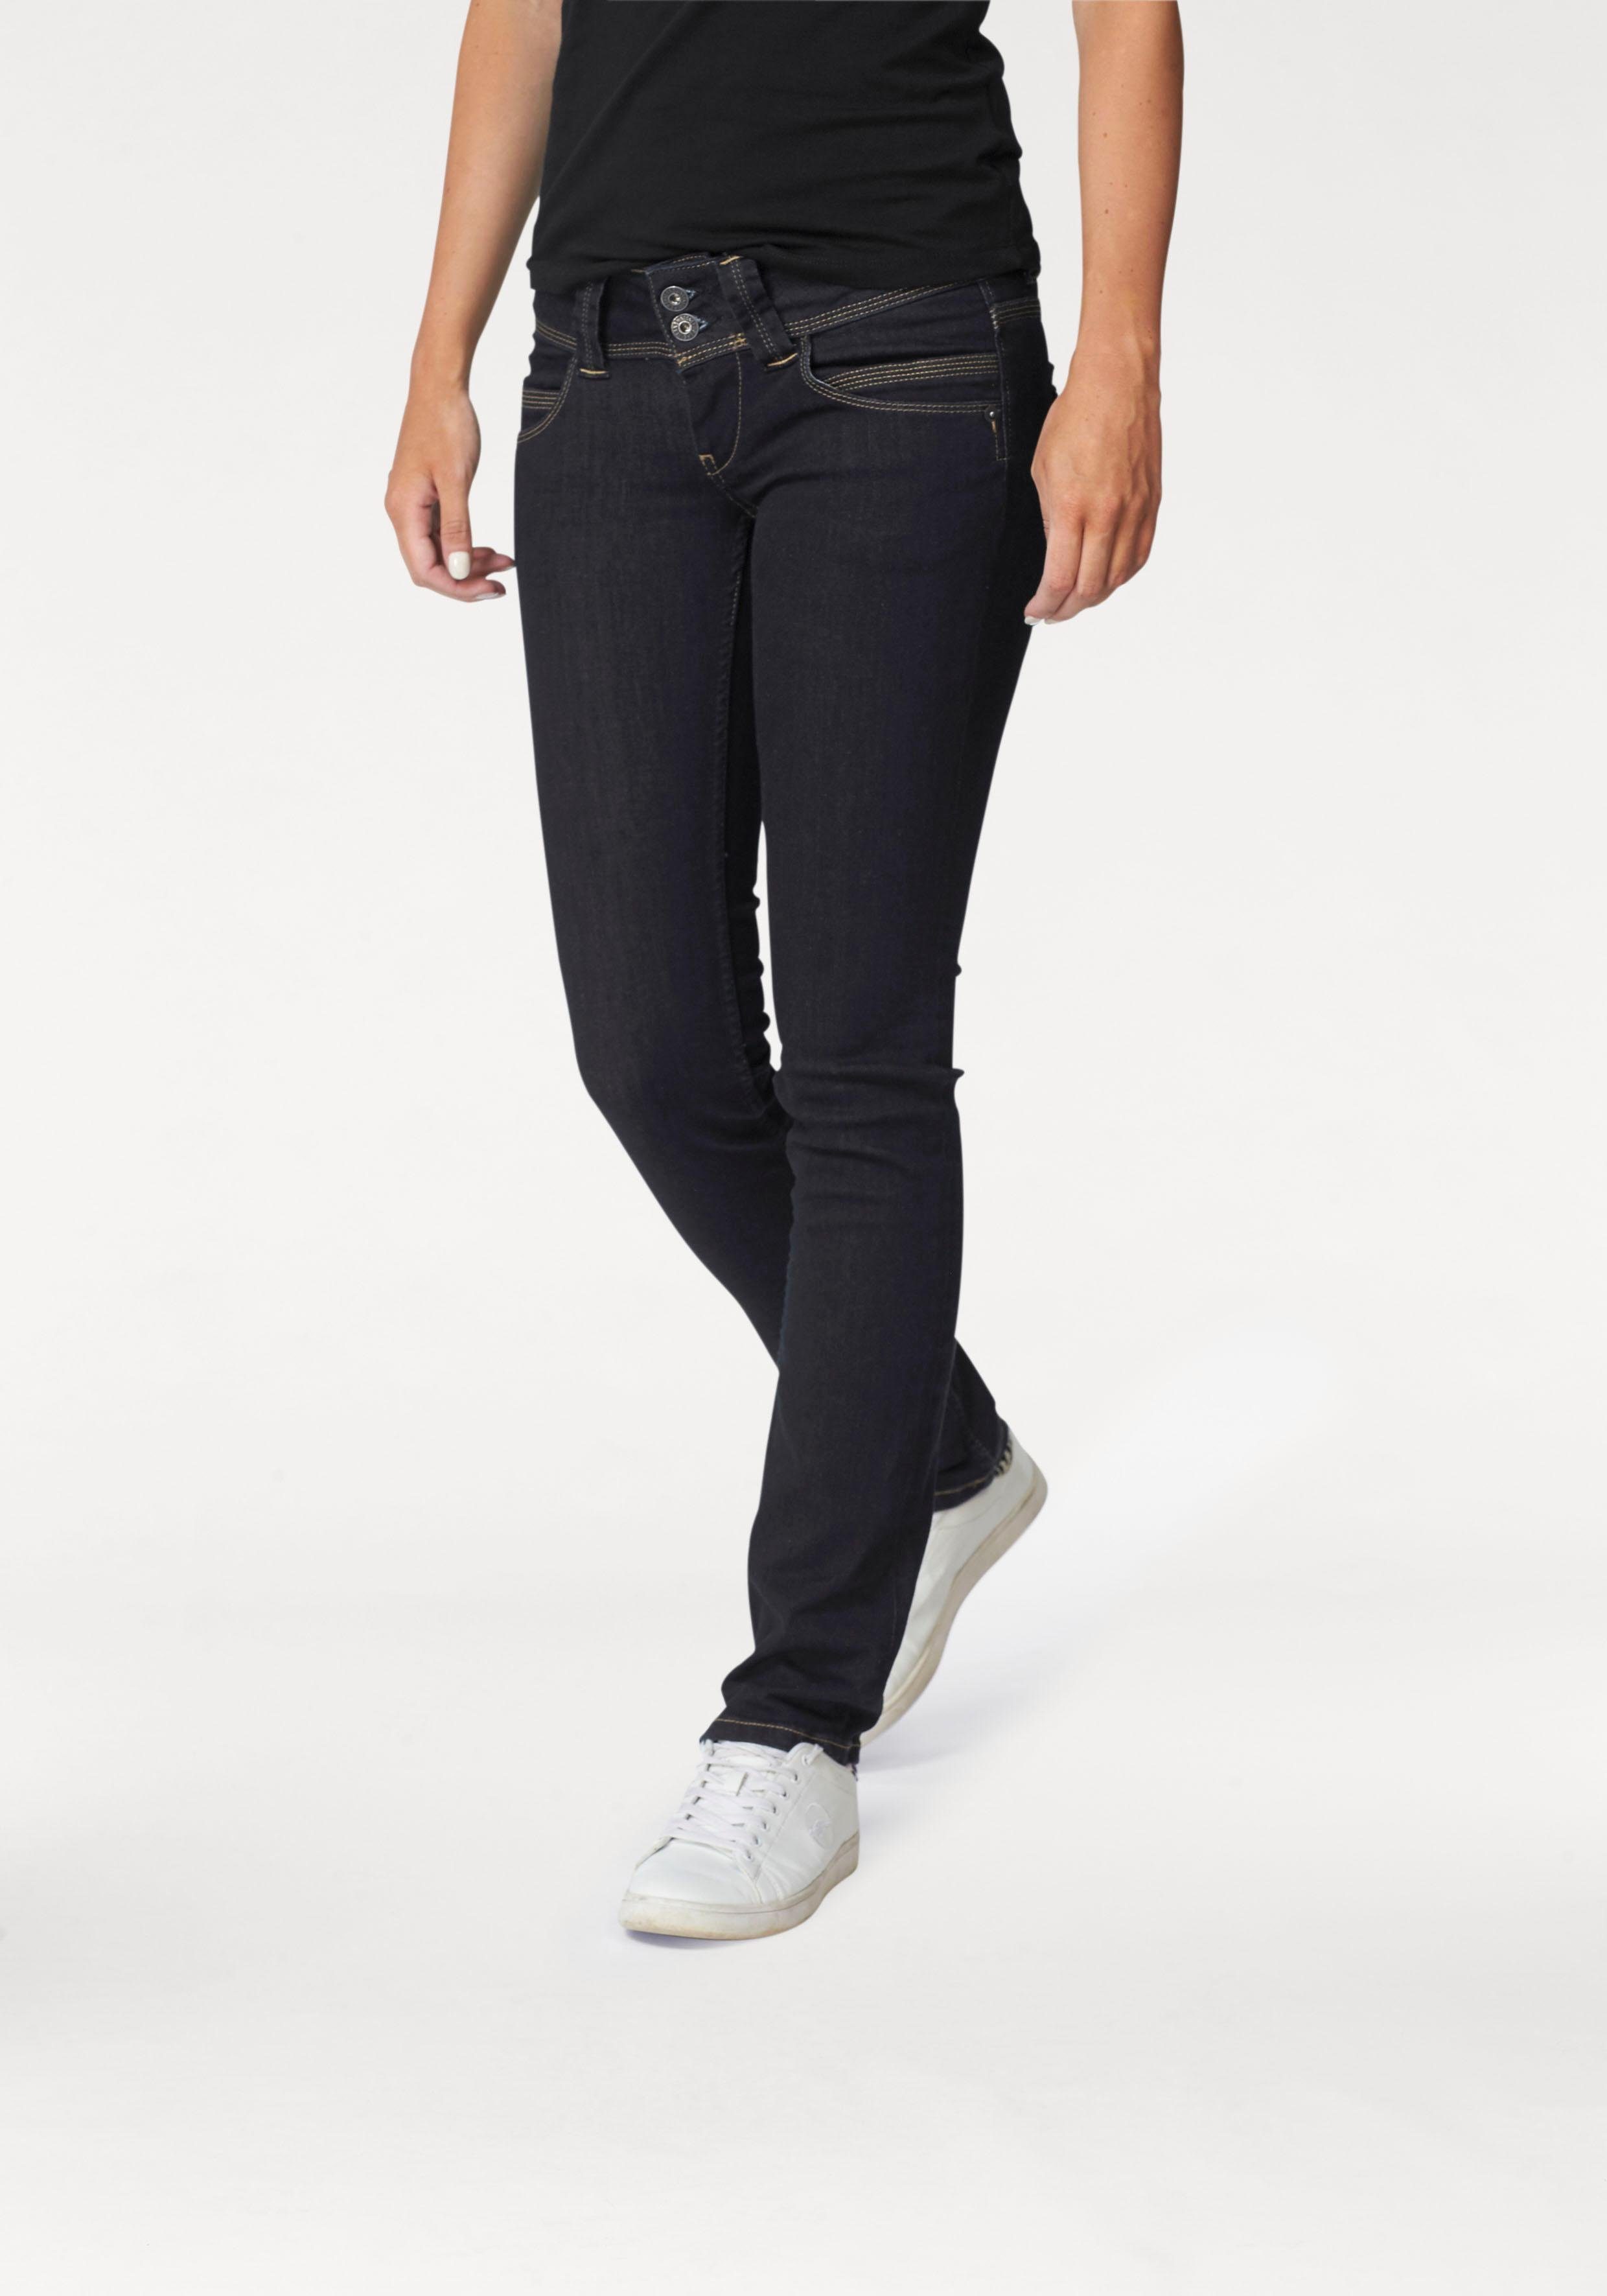 Pepe Jeans Damenmode online kaufen | OTTO